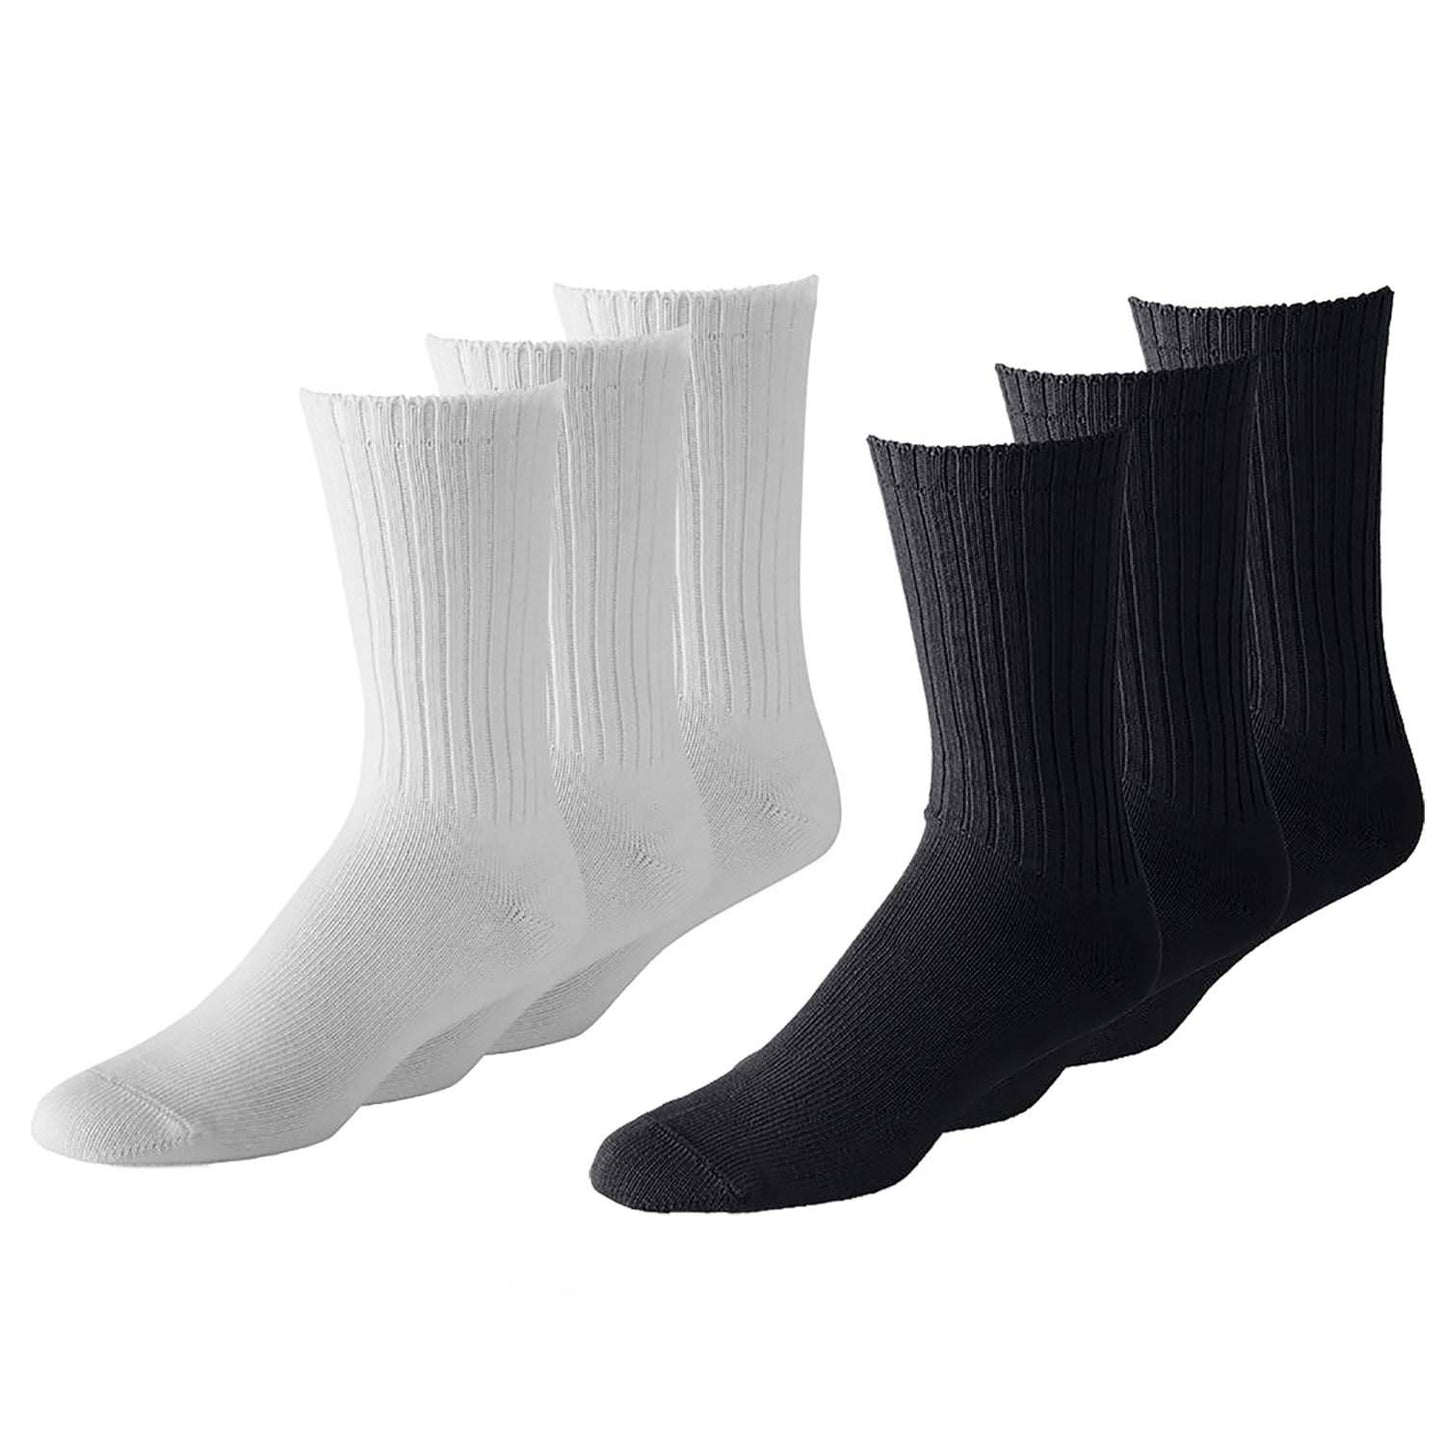 Unisex Crew Athletic Sports Cotton Socks  60 Pack